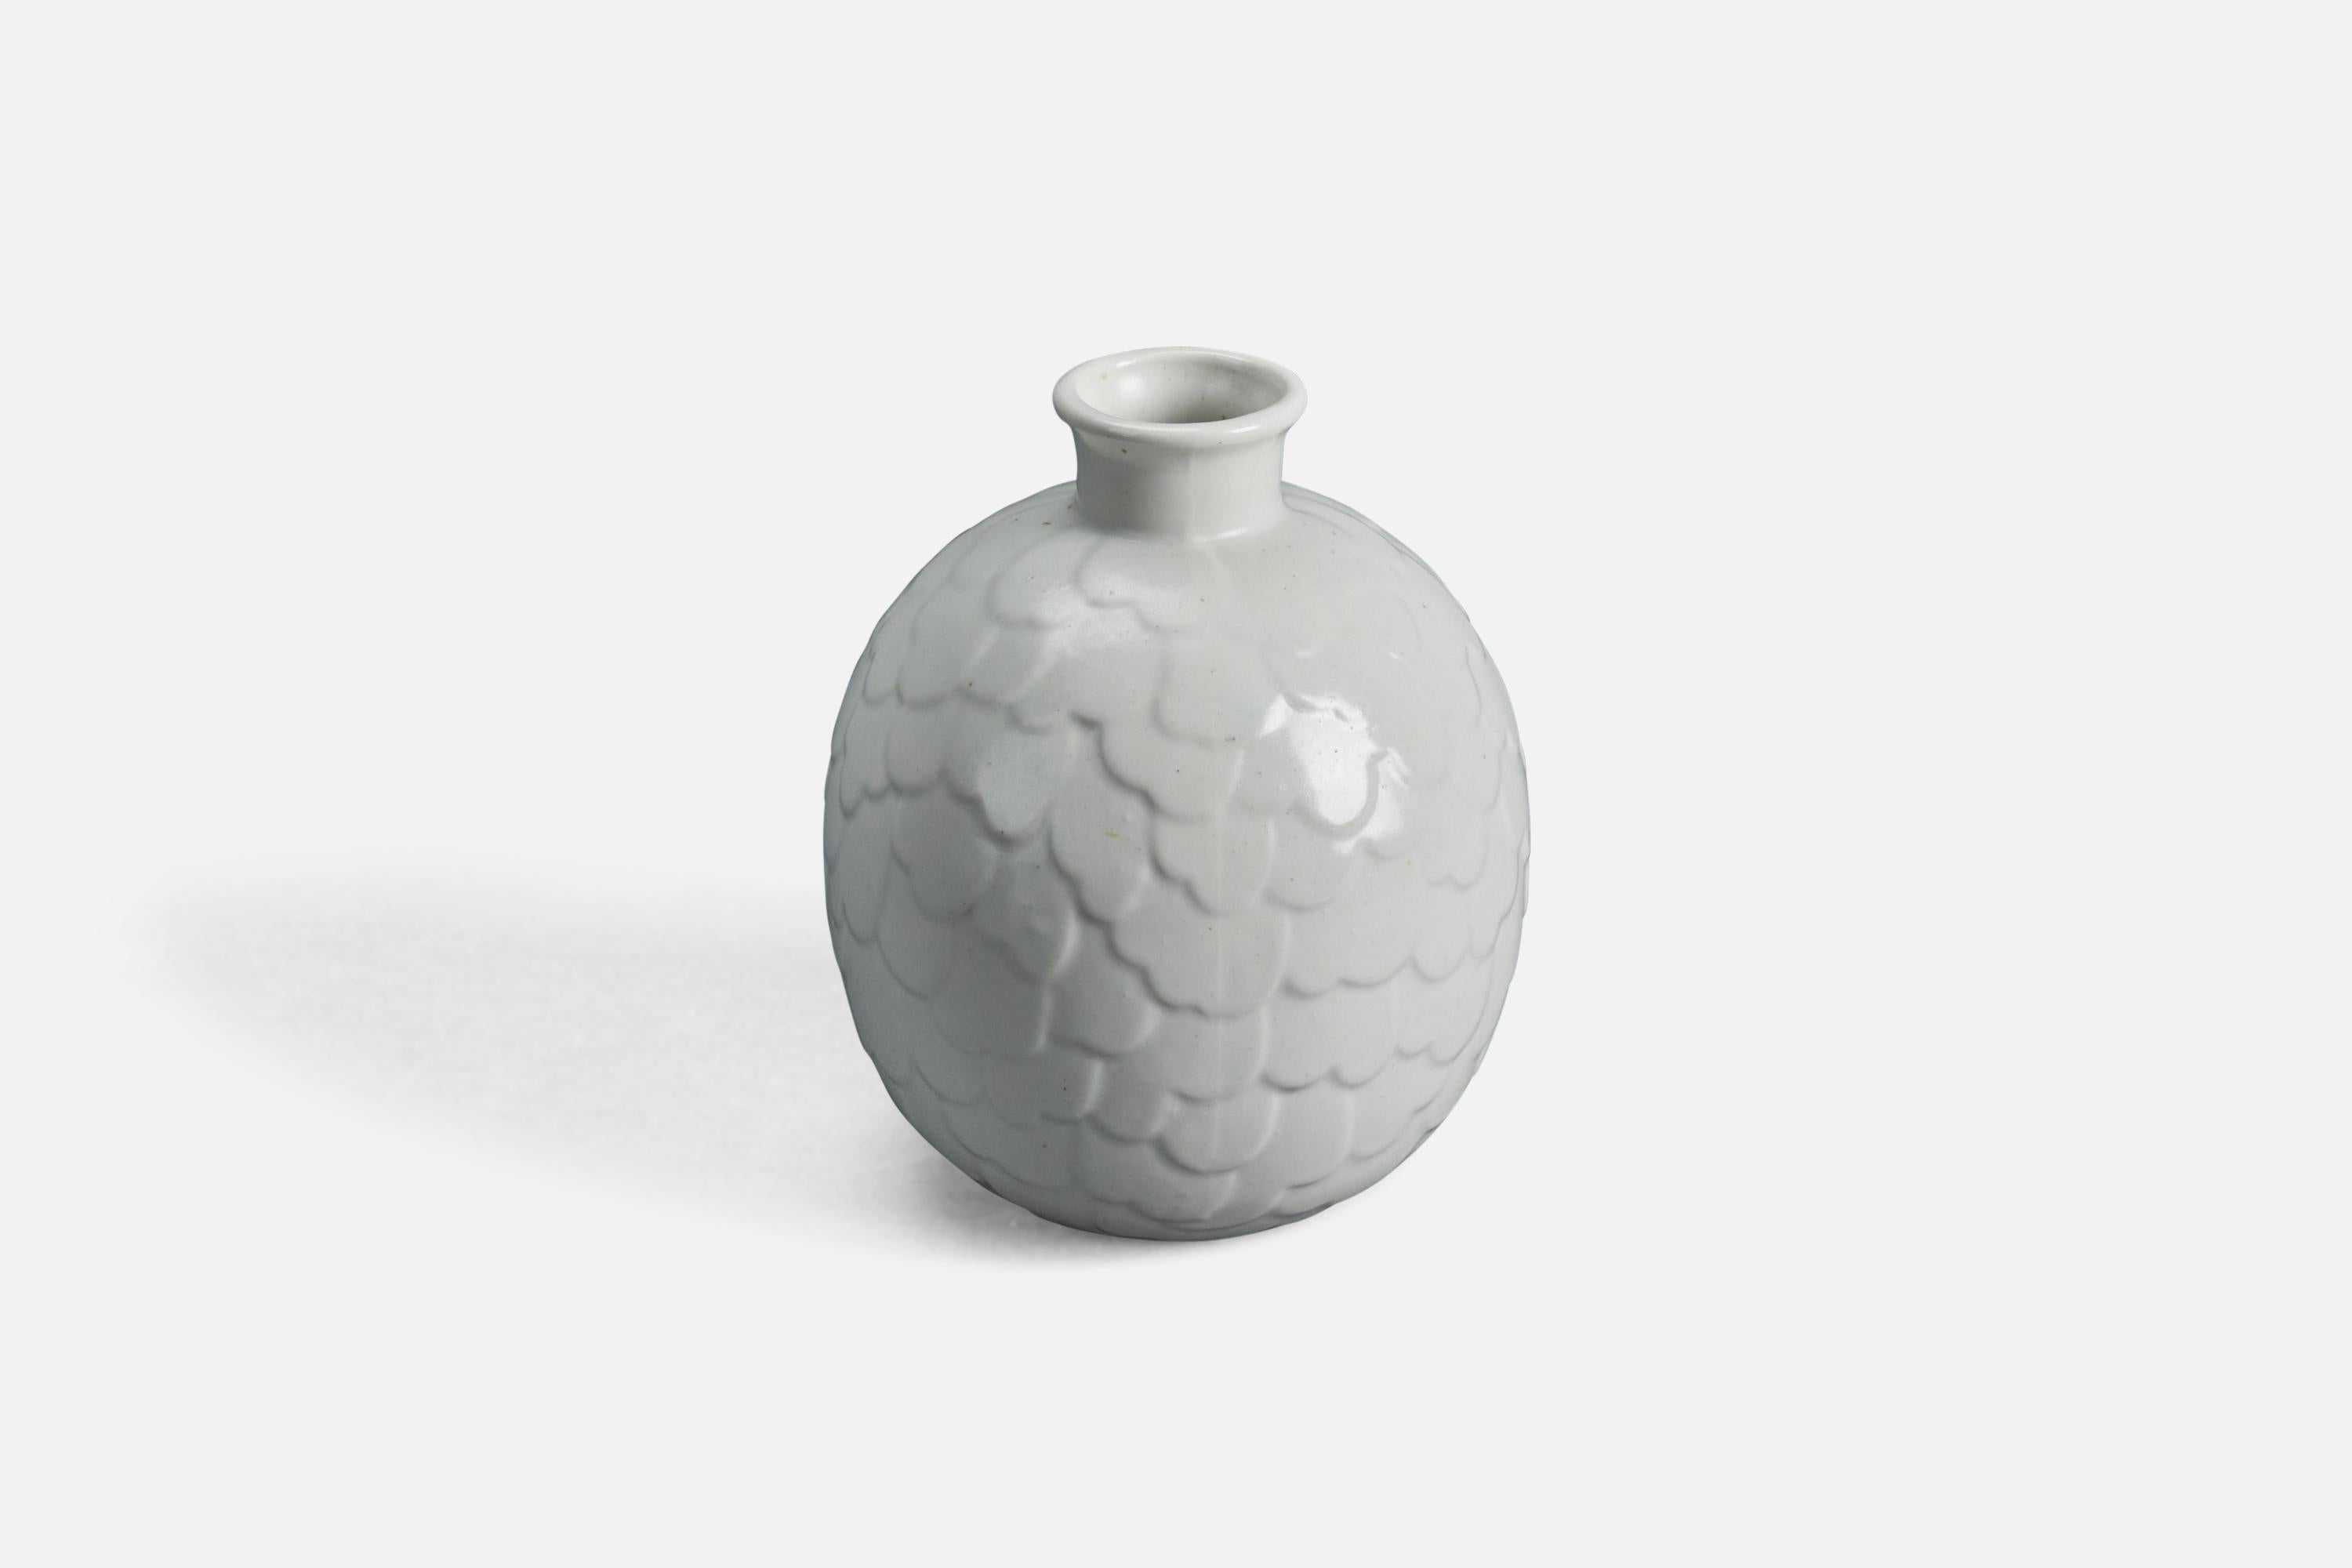 Scandinavian Modern Gertrud Lönegren, Vase, White-Glazed Stoneware, Sweden, 1950s For Sale